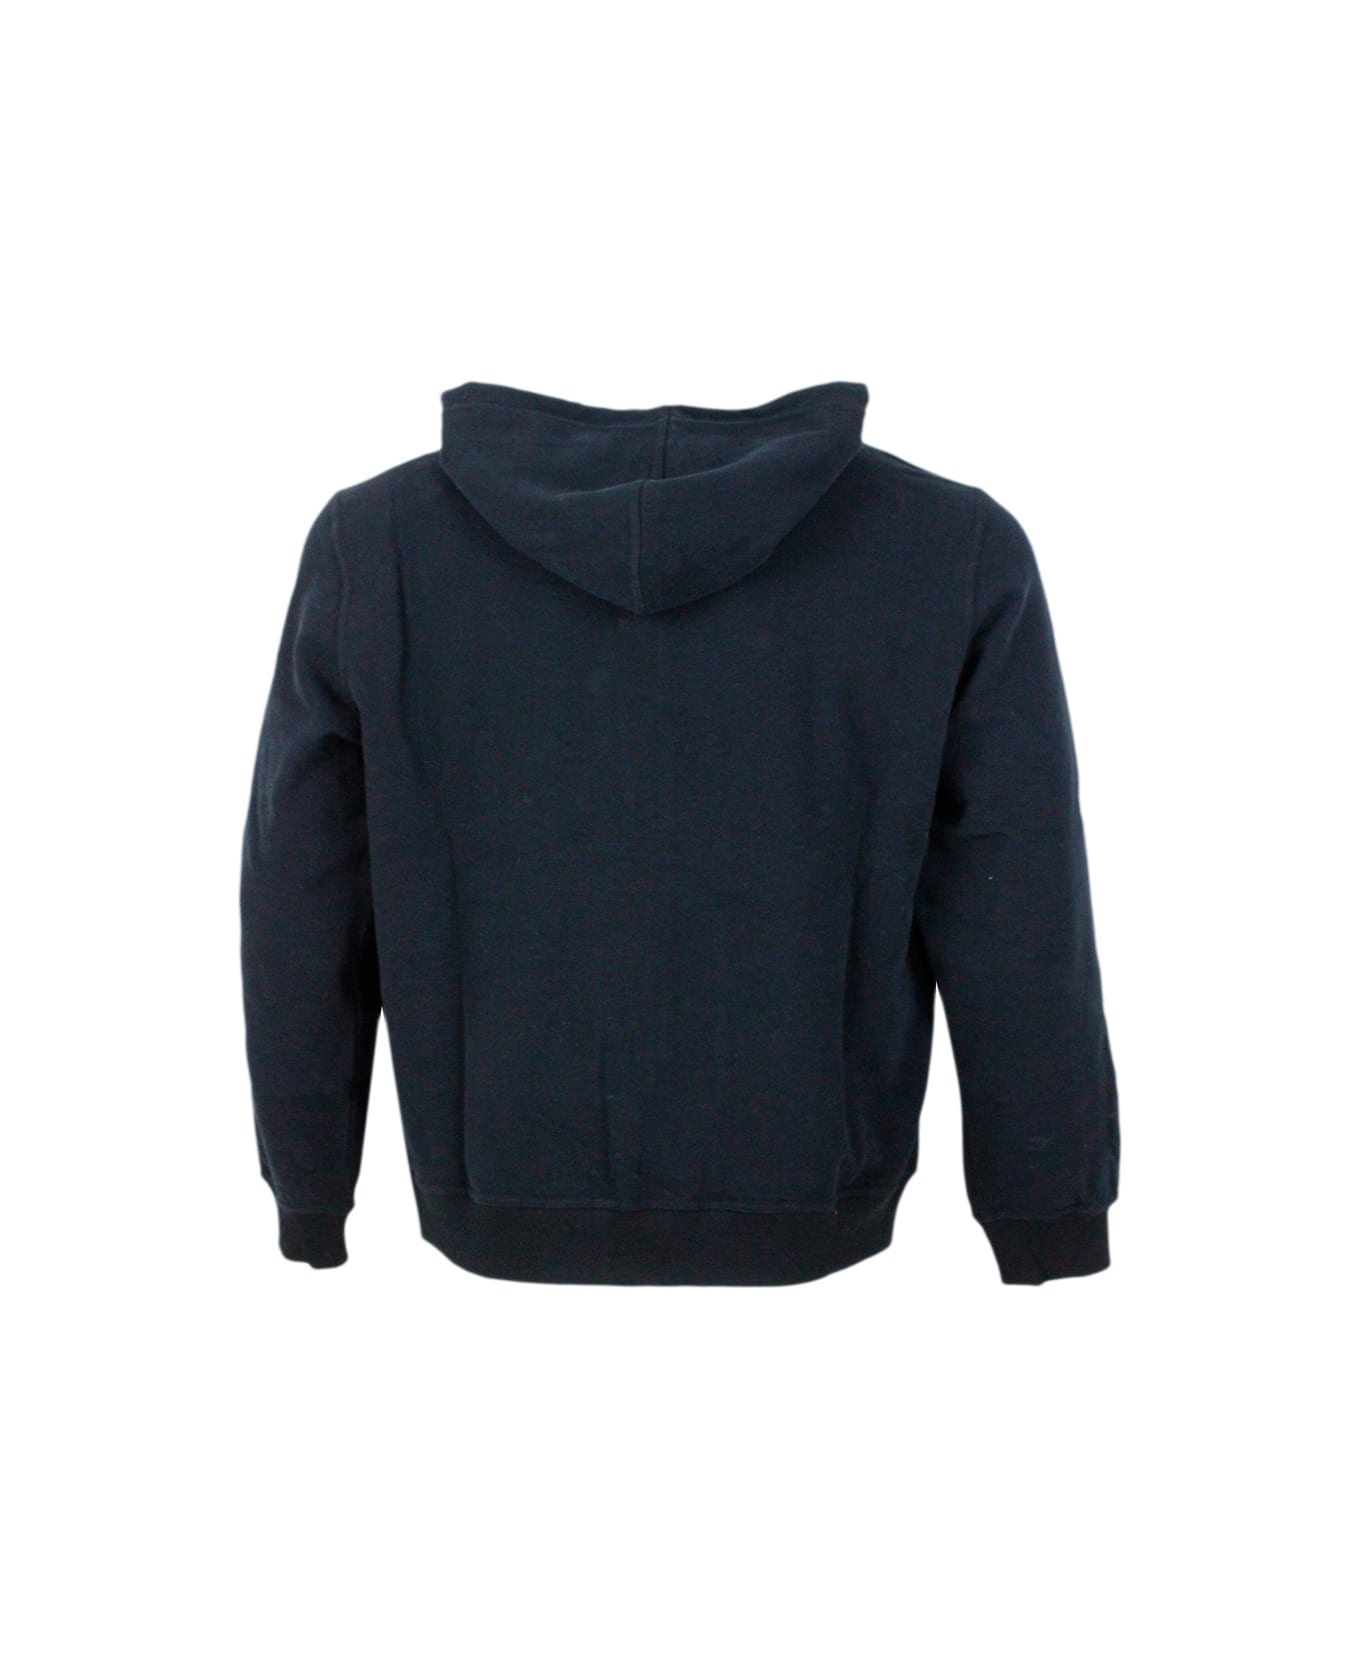 Brunello Cucinelli Hooded Sweatshirt With Drawstring And Zip Closure - Black